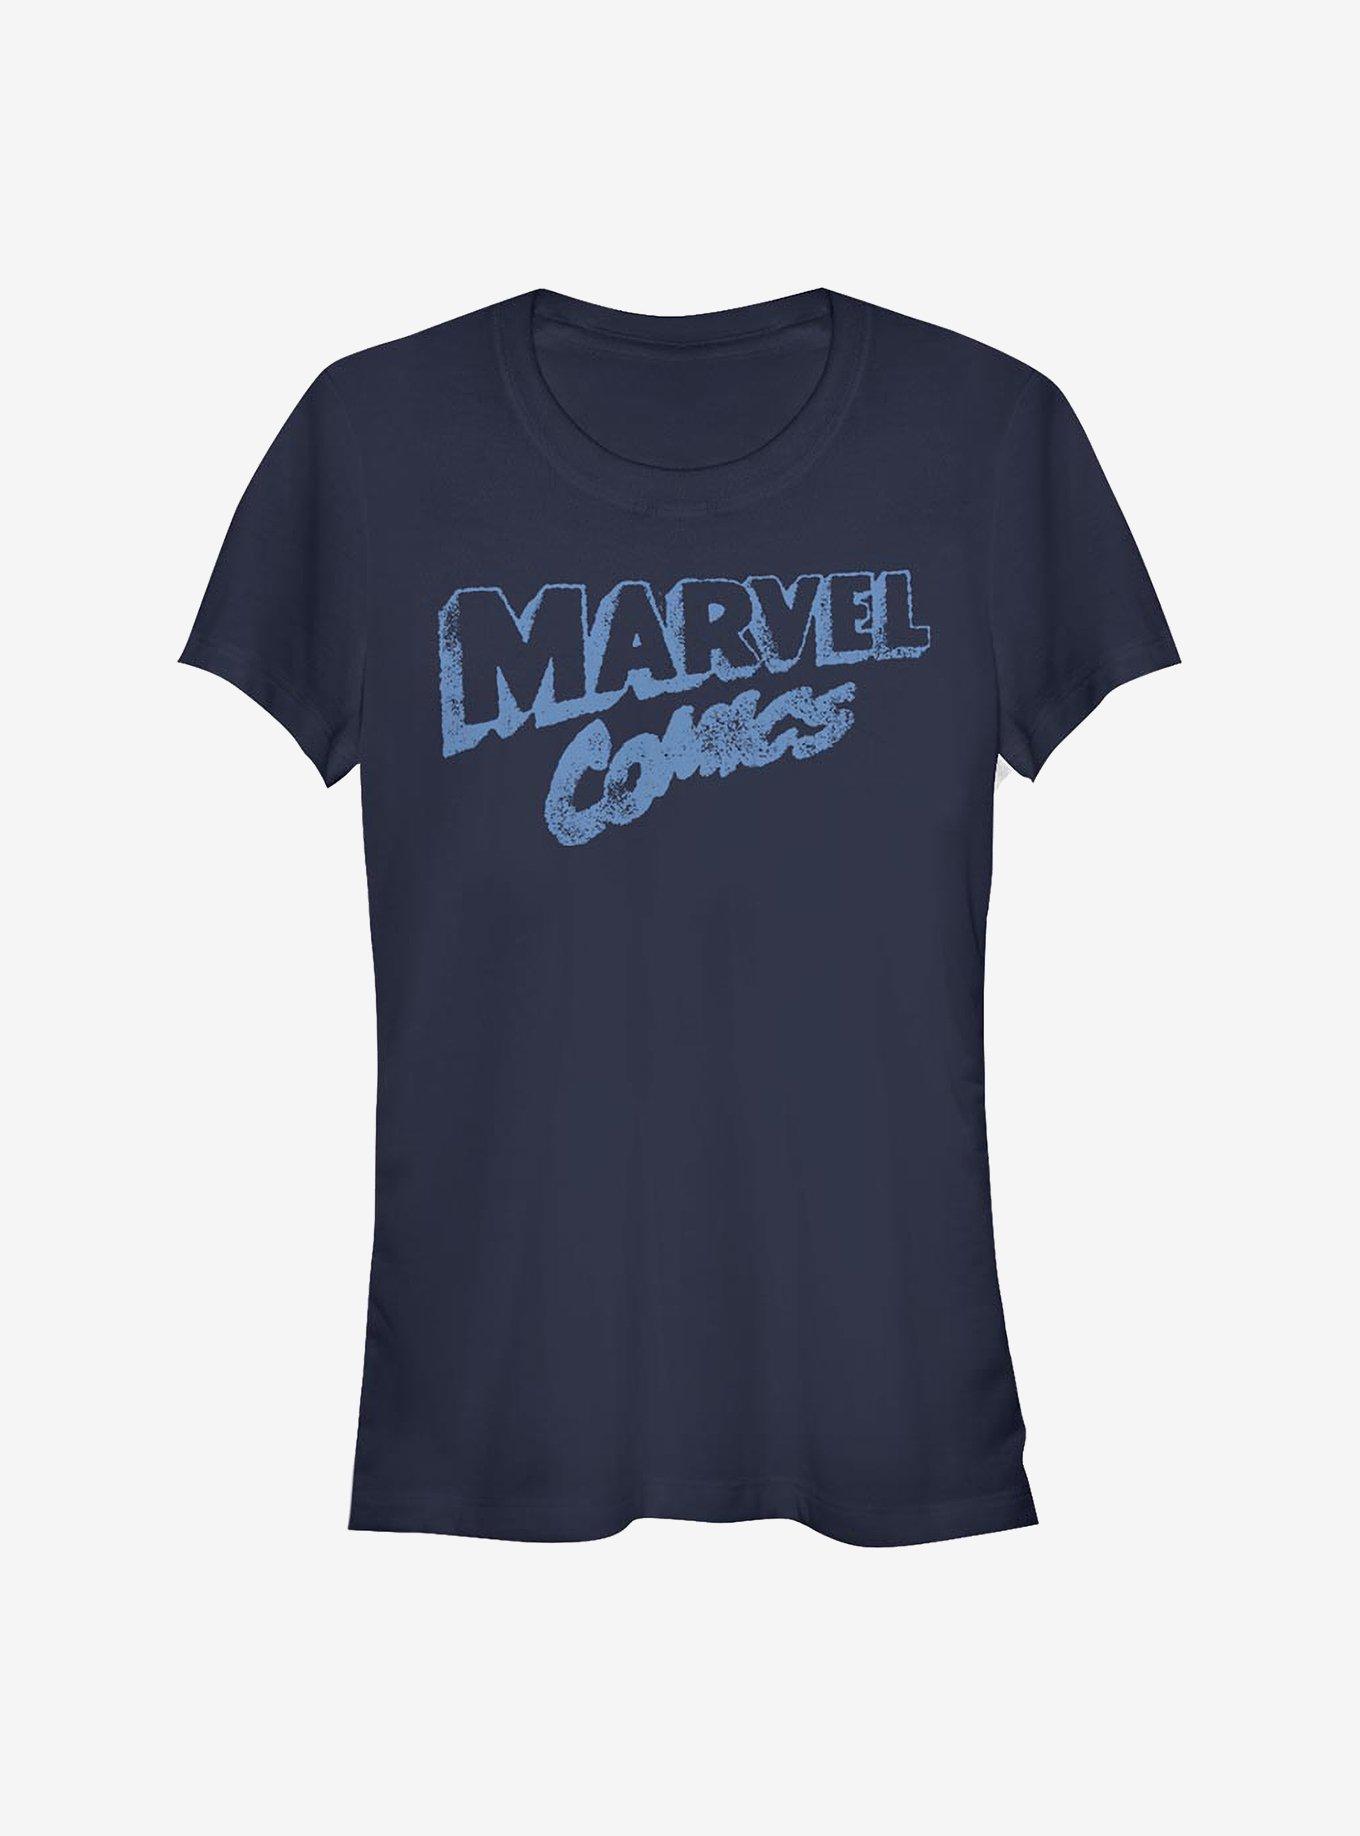 Marvel Retro Comics Logo Girls T-Shirt, NAVY, hi-res